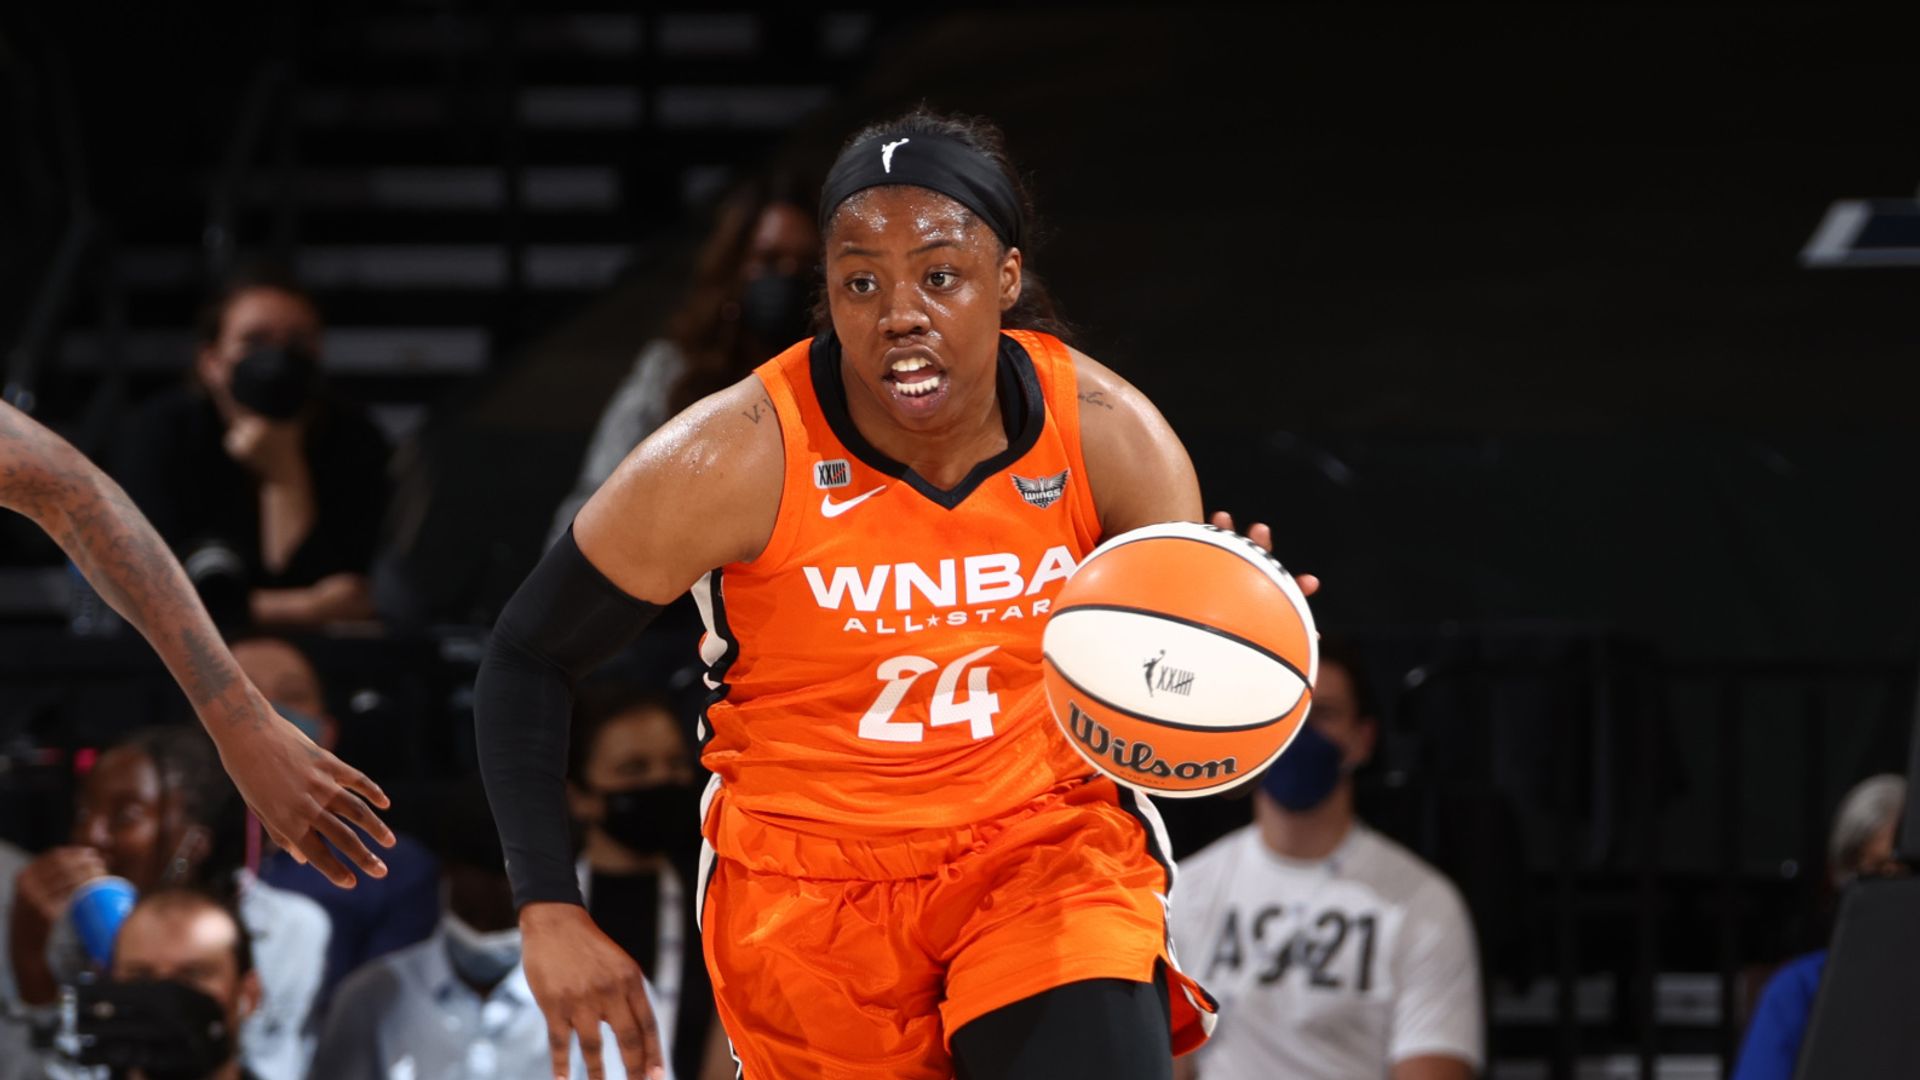 Team WNBA takes down Team USA in All-Star Game